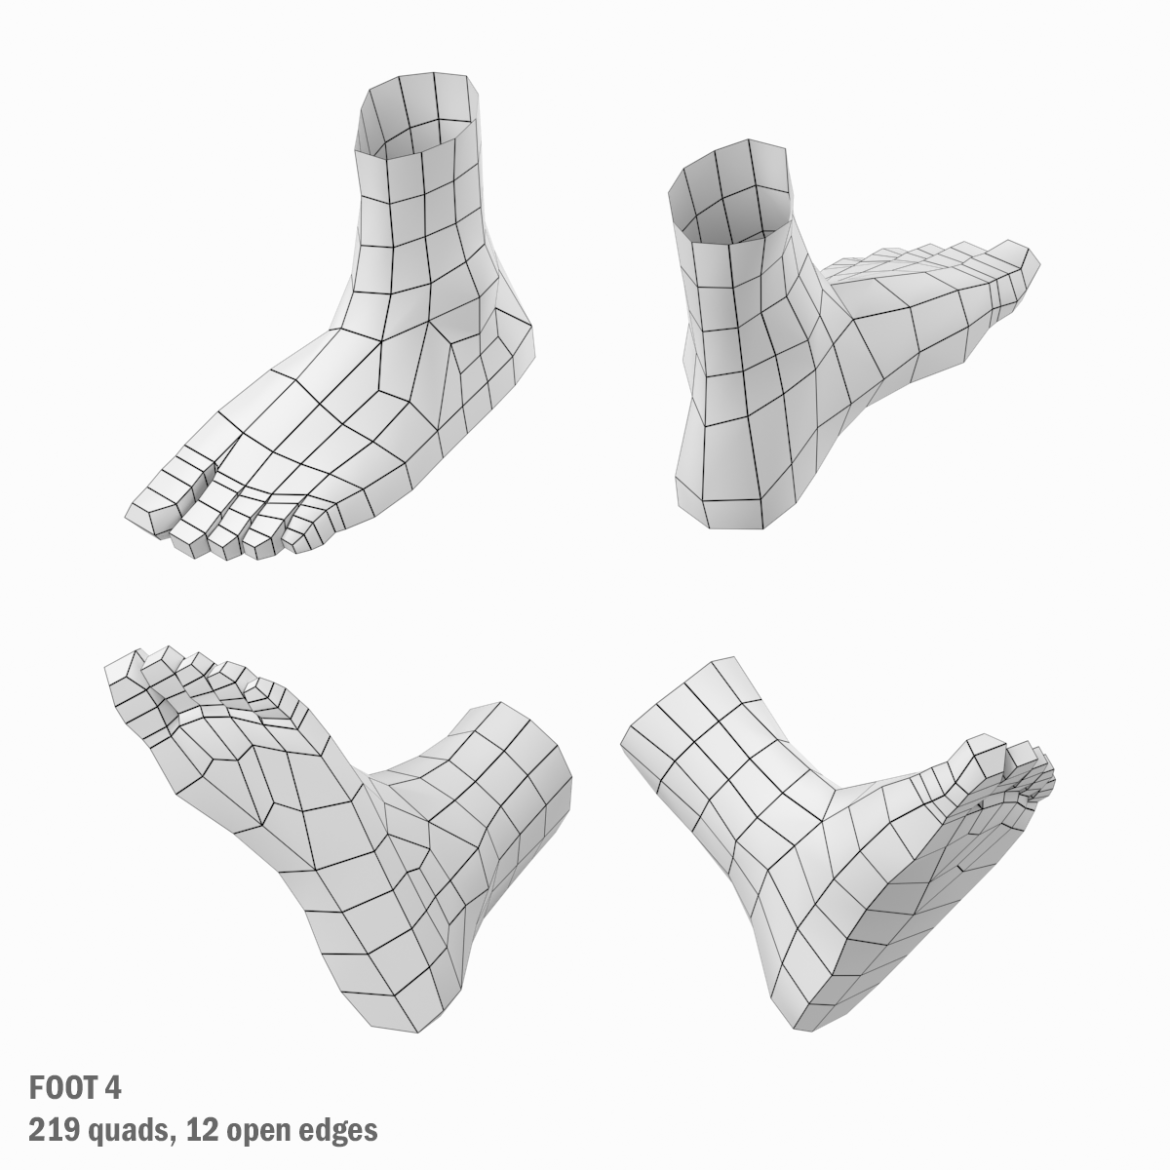  <a class="continue" href="https://www.flatpyramid.com/3d-models/medical-3d-models/anatomy/skeletal-system/leg/foot-base-mesh-kit/">Continue Reading<span> Foot Base Mesh Kit</span></a>